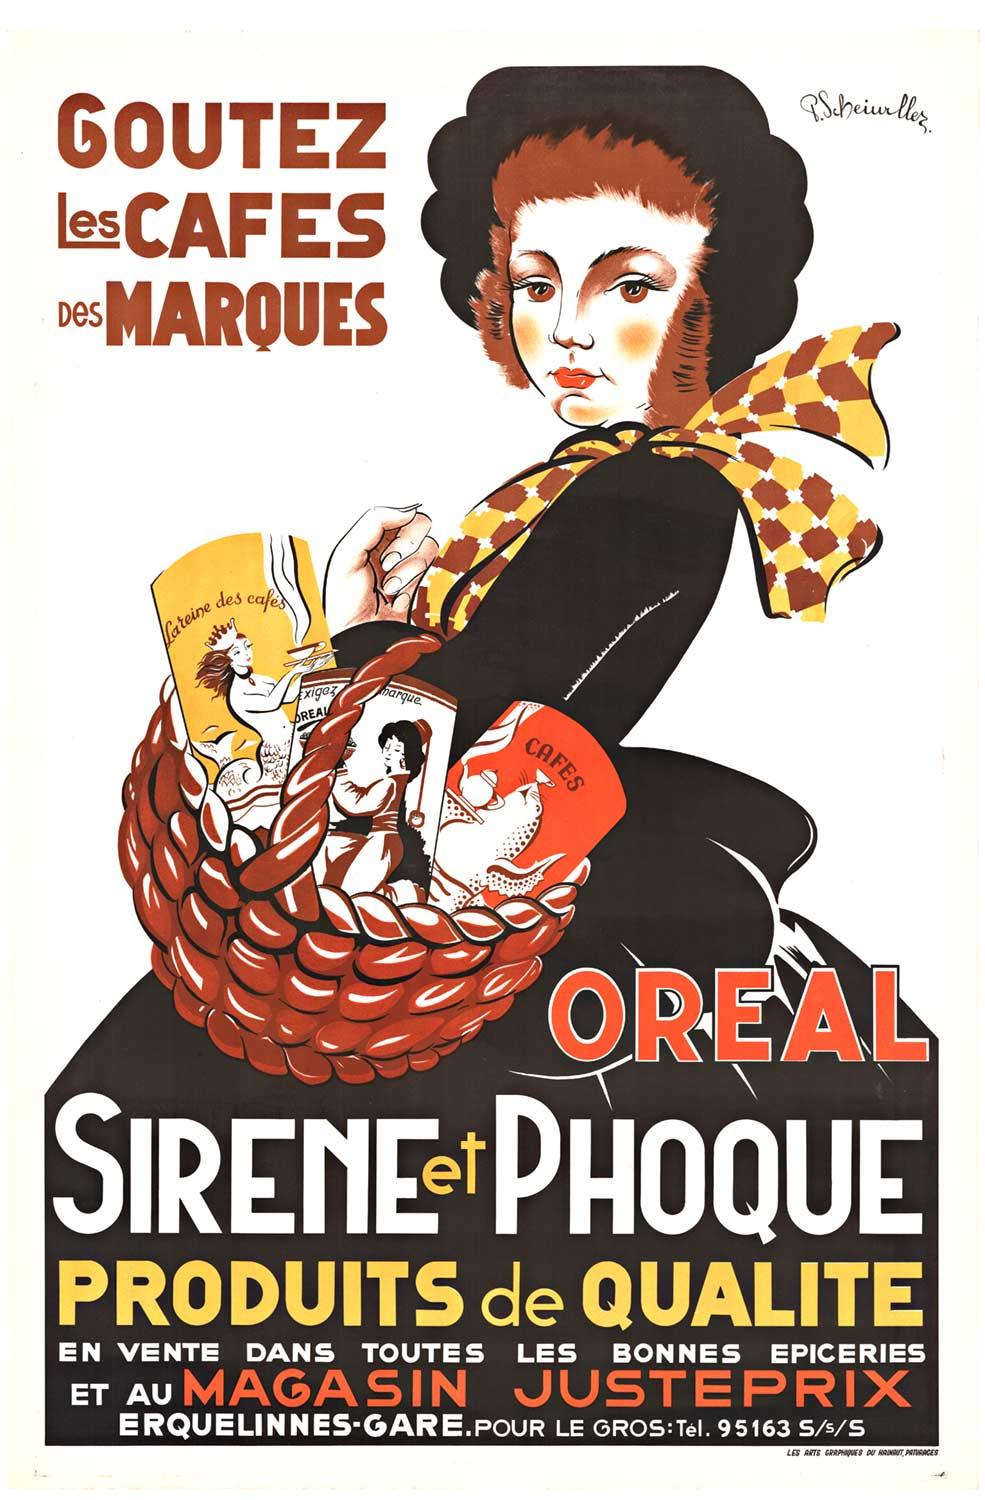 P. Scheiurllez Portrait Print - Orignal " Oreal Sirene et Phoque" 1940s coffee poster